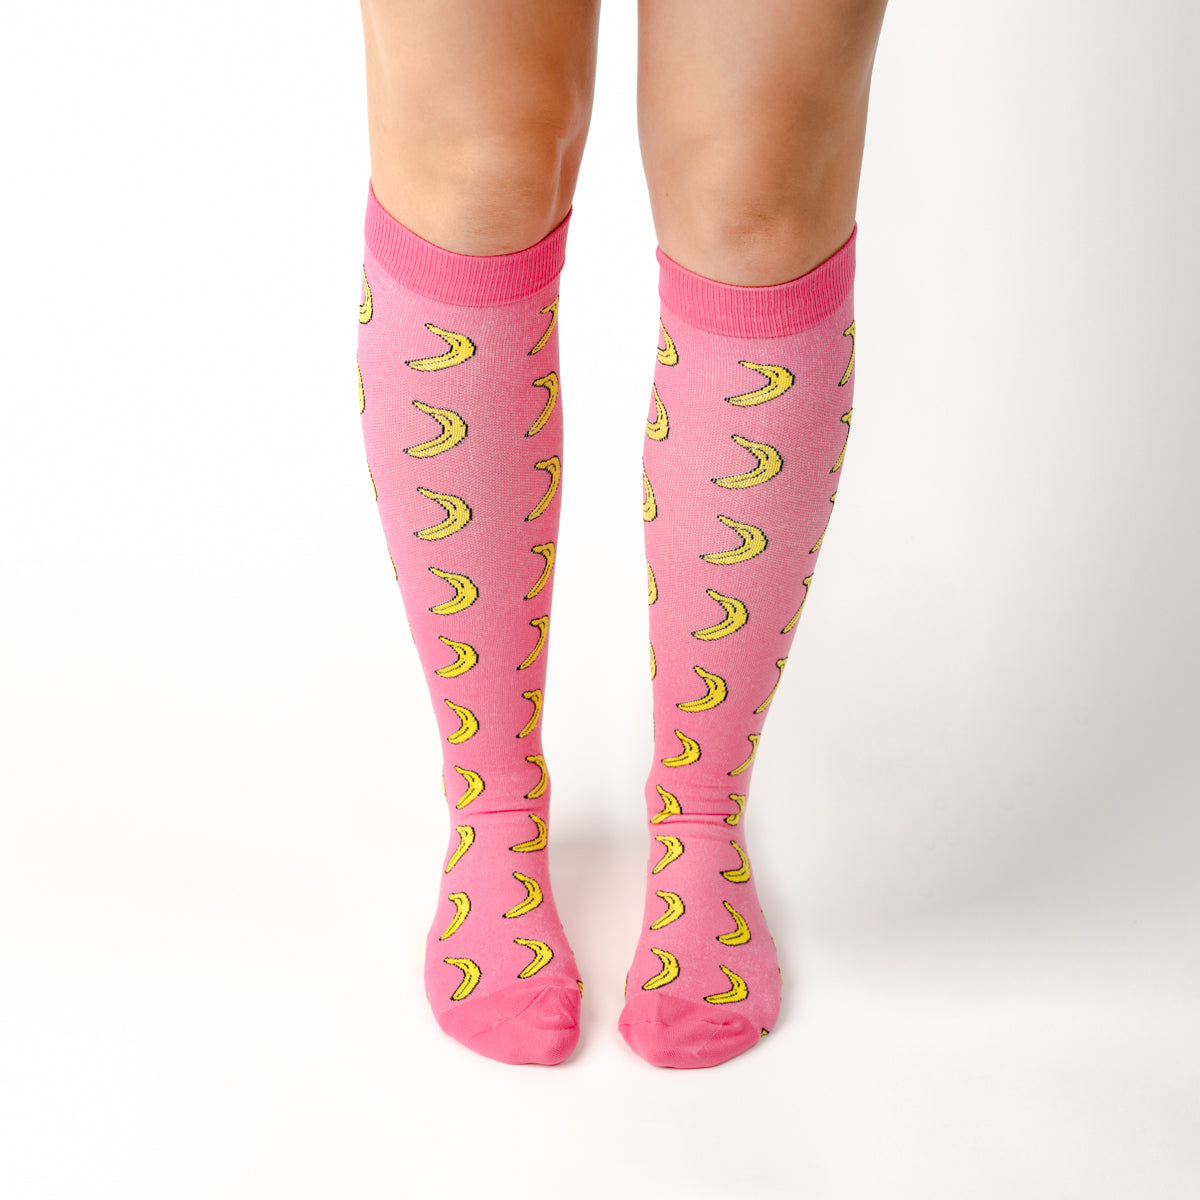 Pink Banana Compression Socks